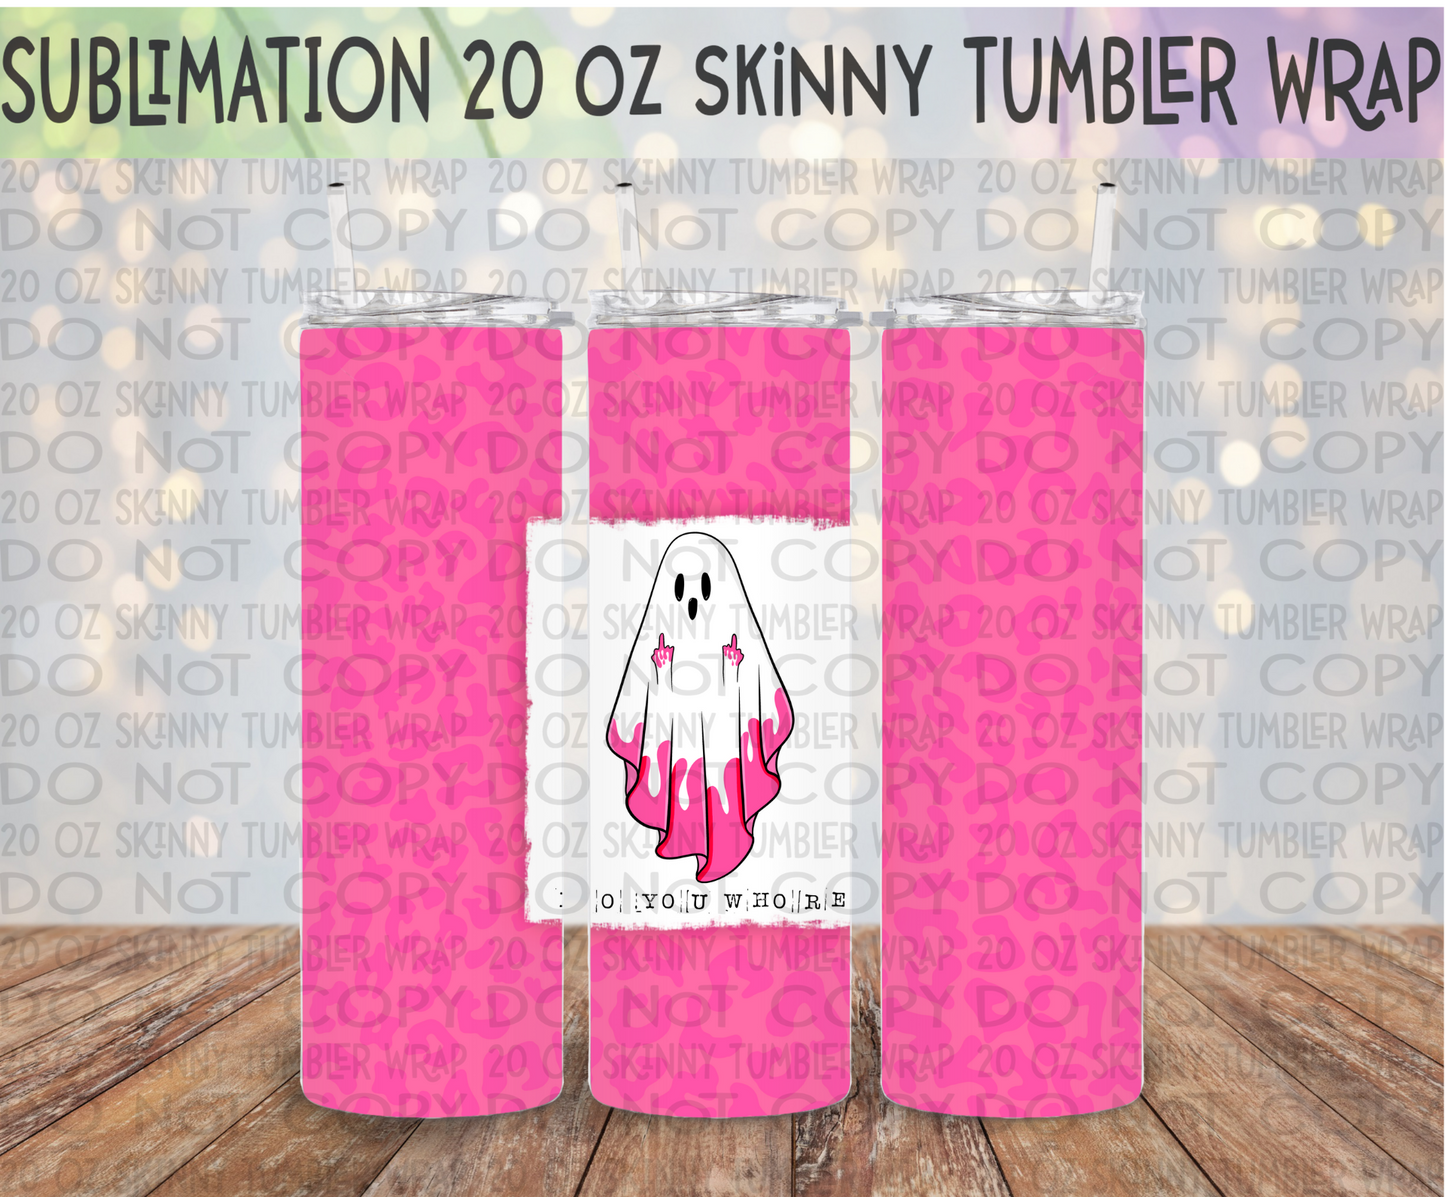 Boo You Whore 20 Oz Skinny Tumbler Wrap - Sublimation Transfer - RTS